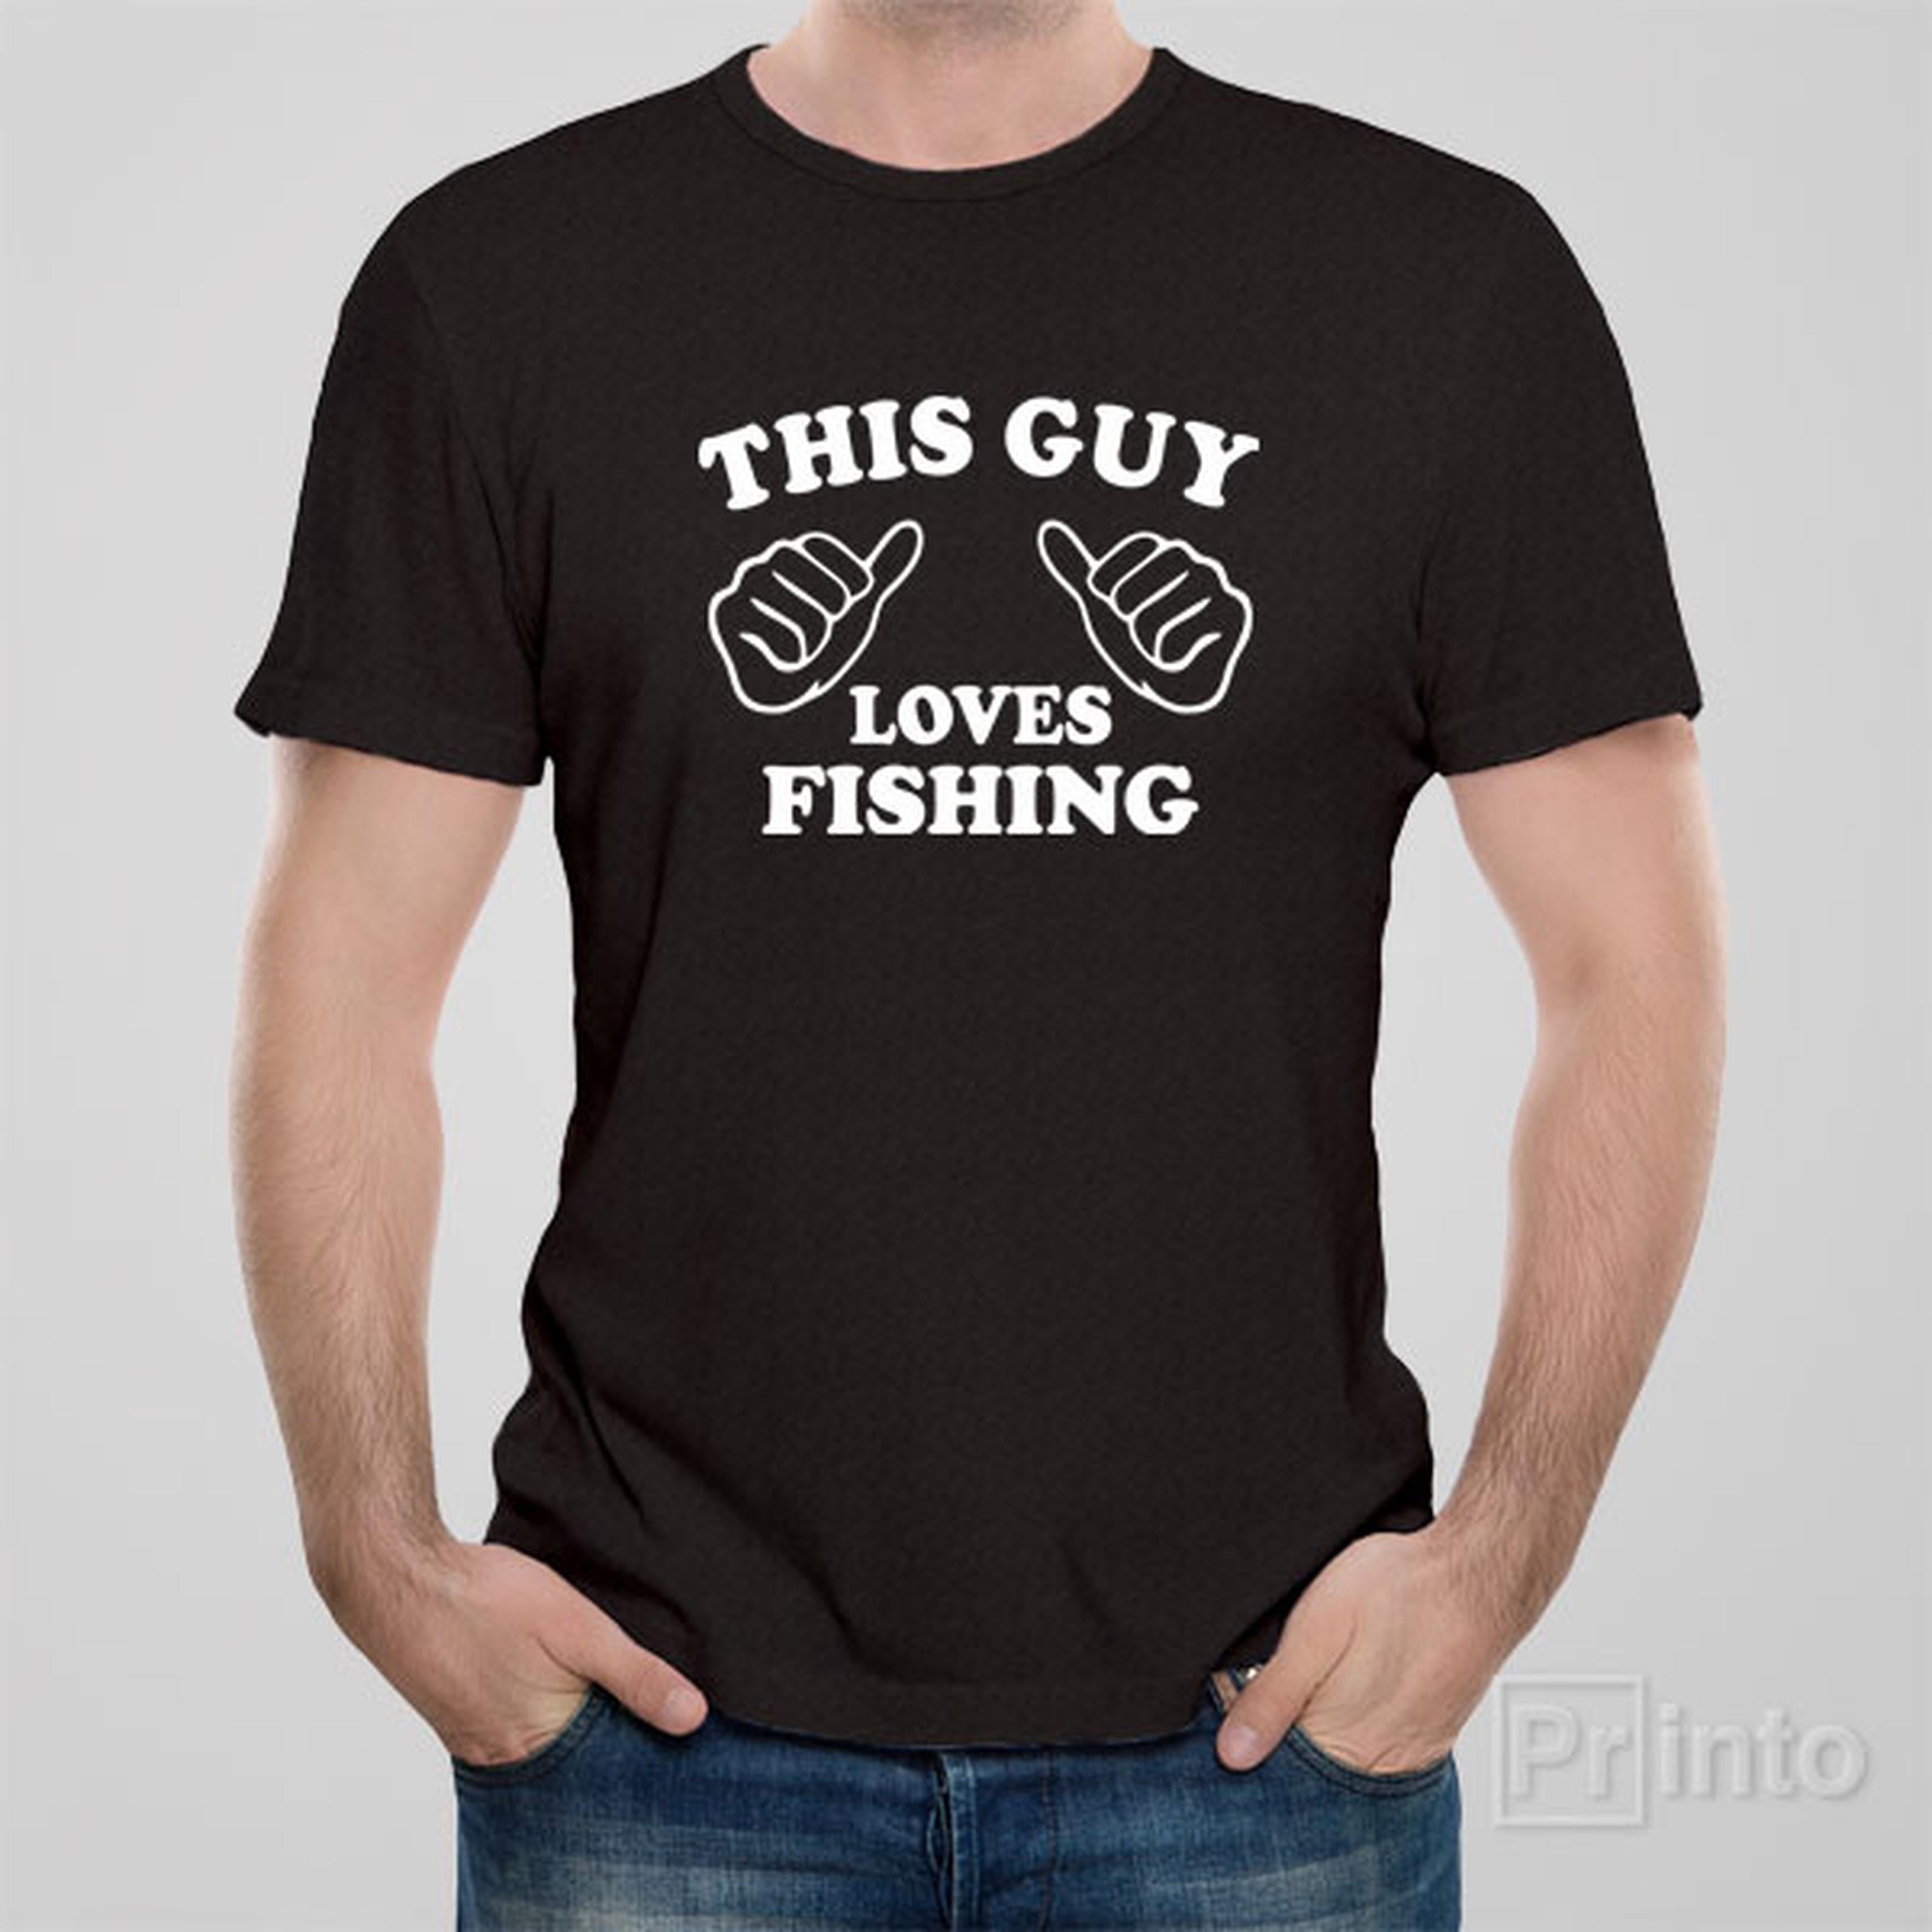 this-guy-loves-fishing-t-shirt